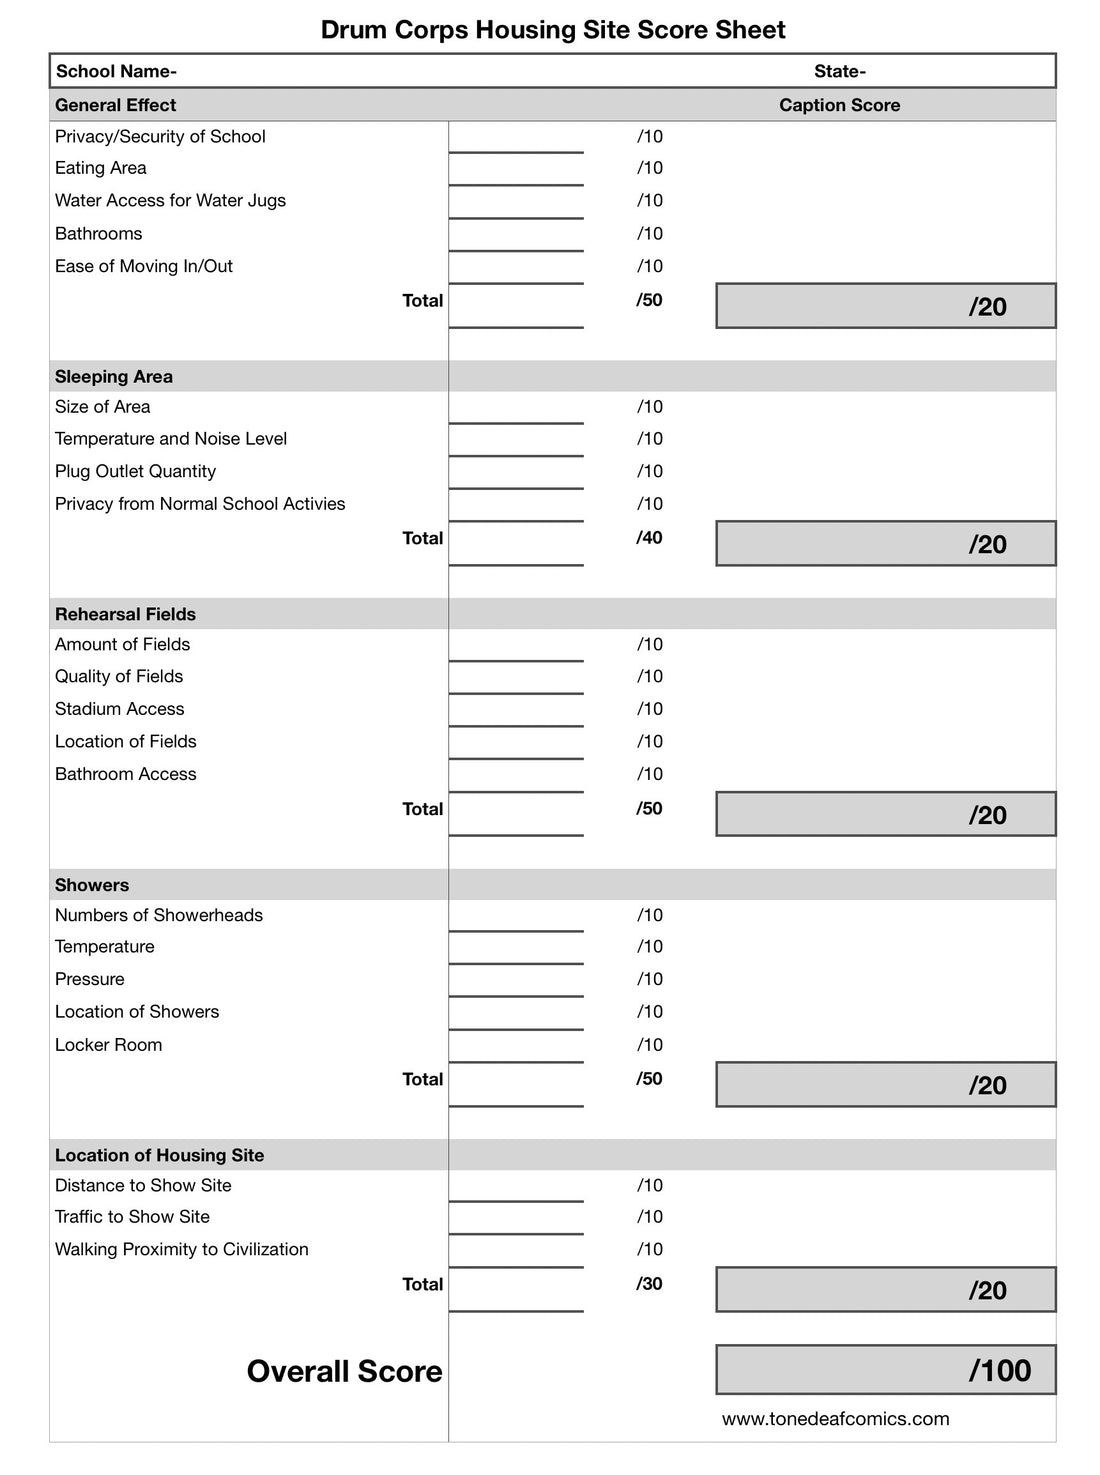 Drum Corps Housing Site Score Sheet